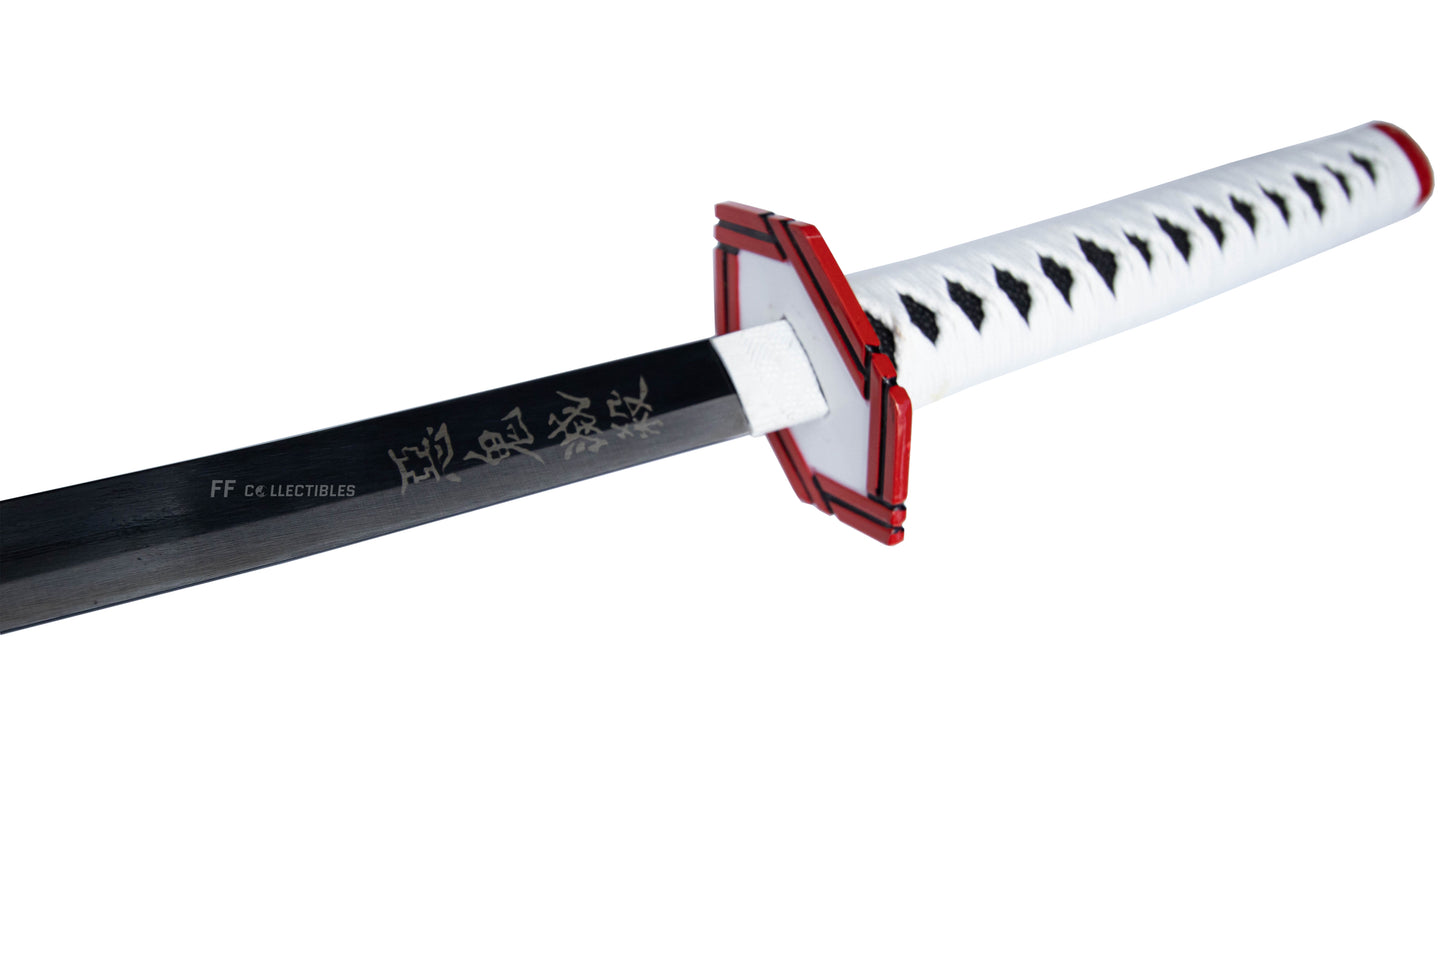 DEMON SLAYER – GIYU TOMIOKA'S NICHIRIN SWORD (w FREE sword stand)